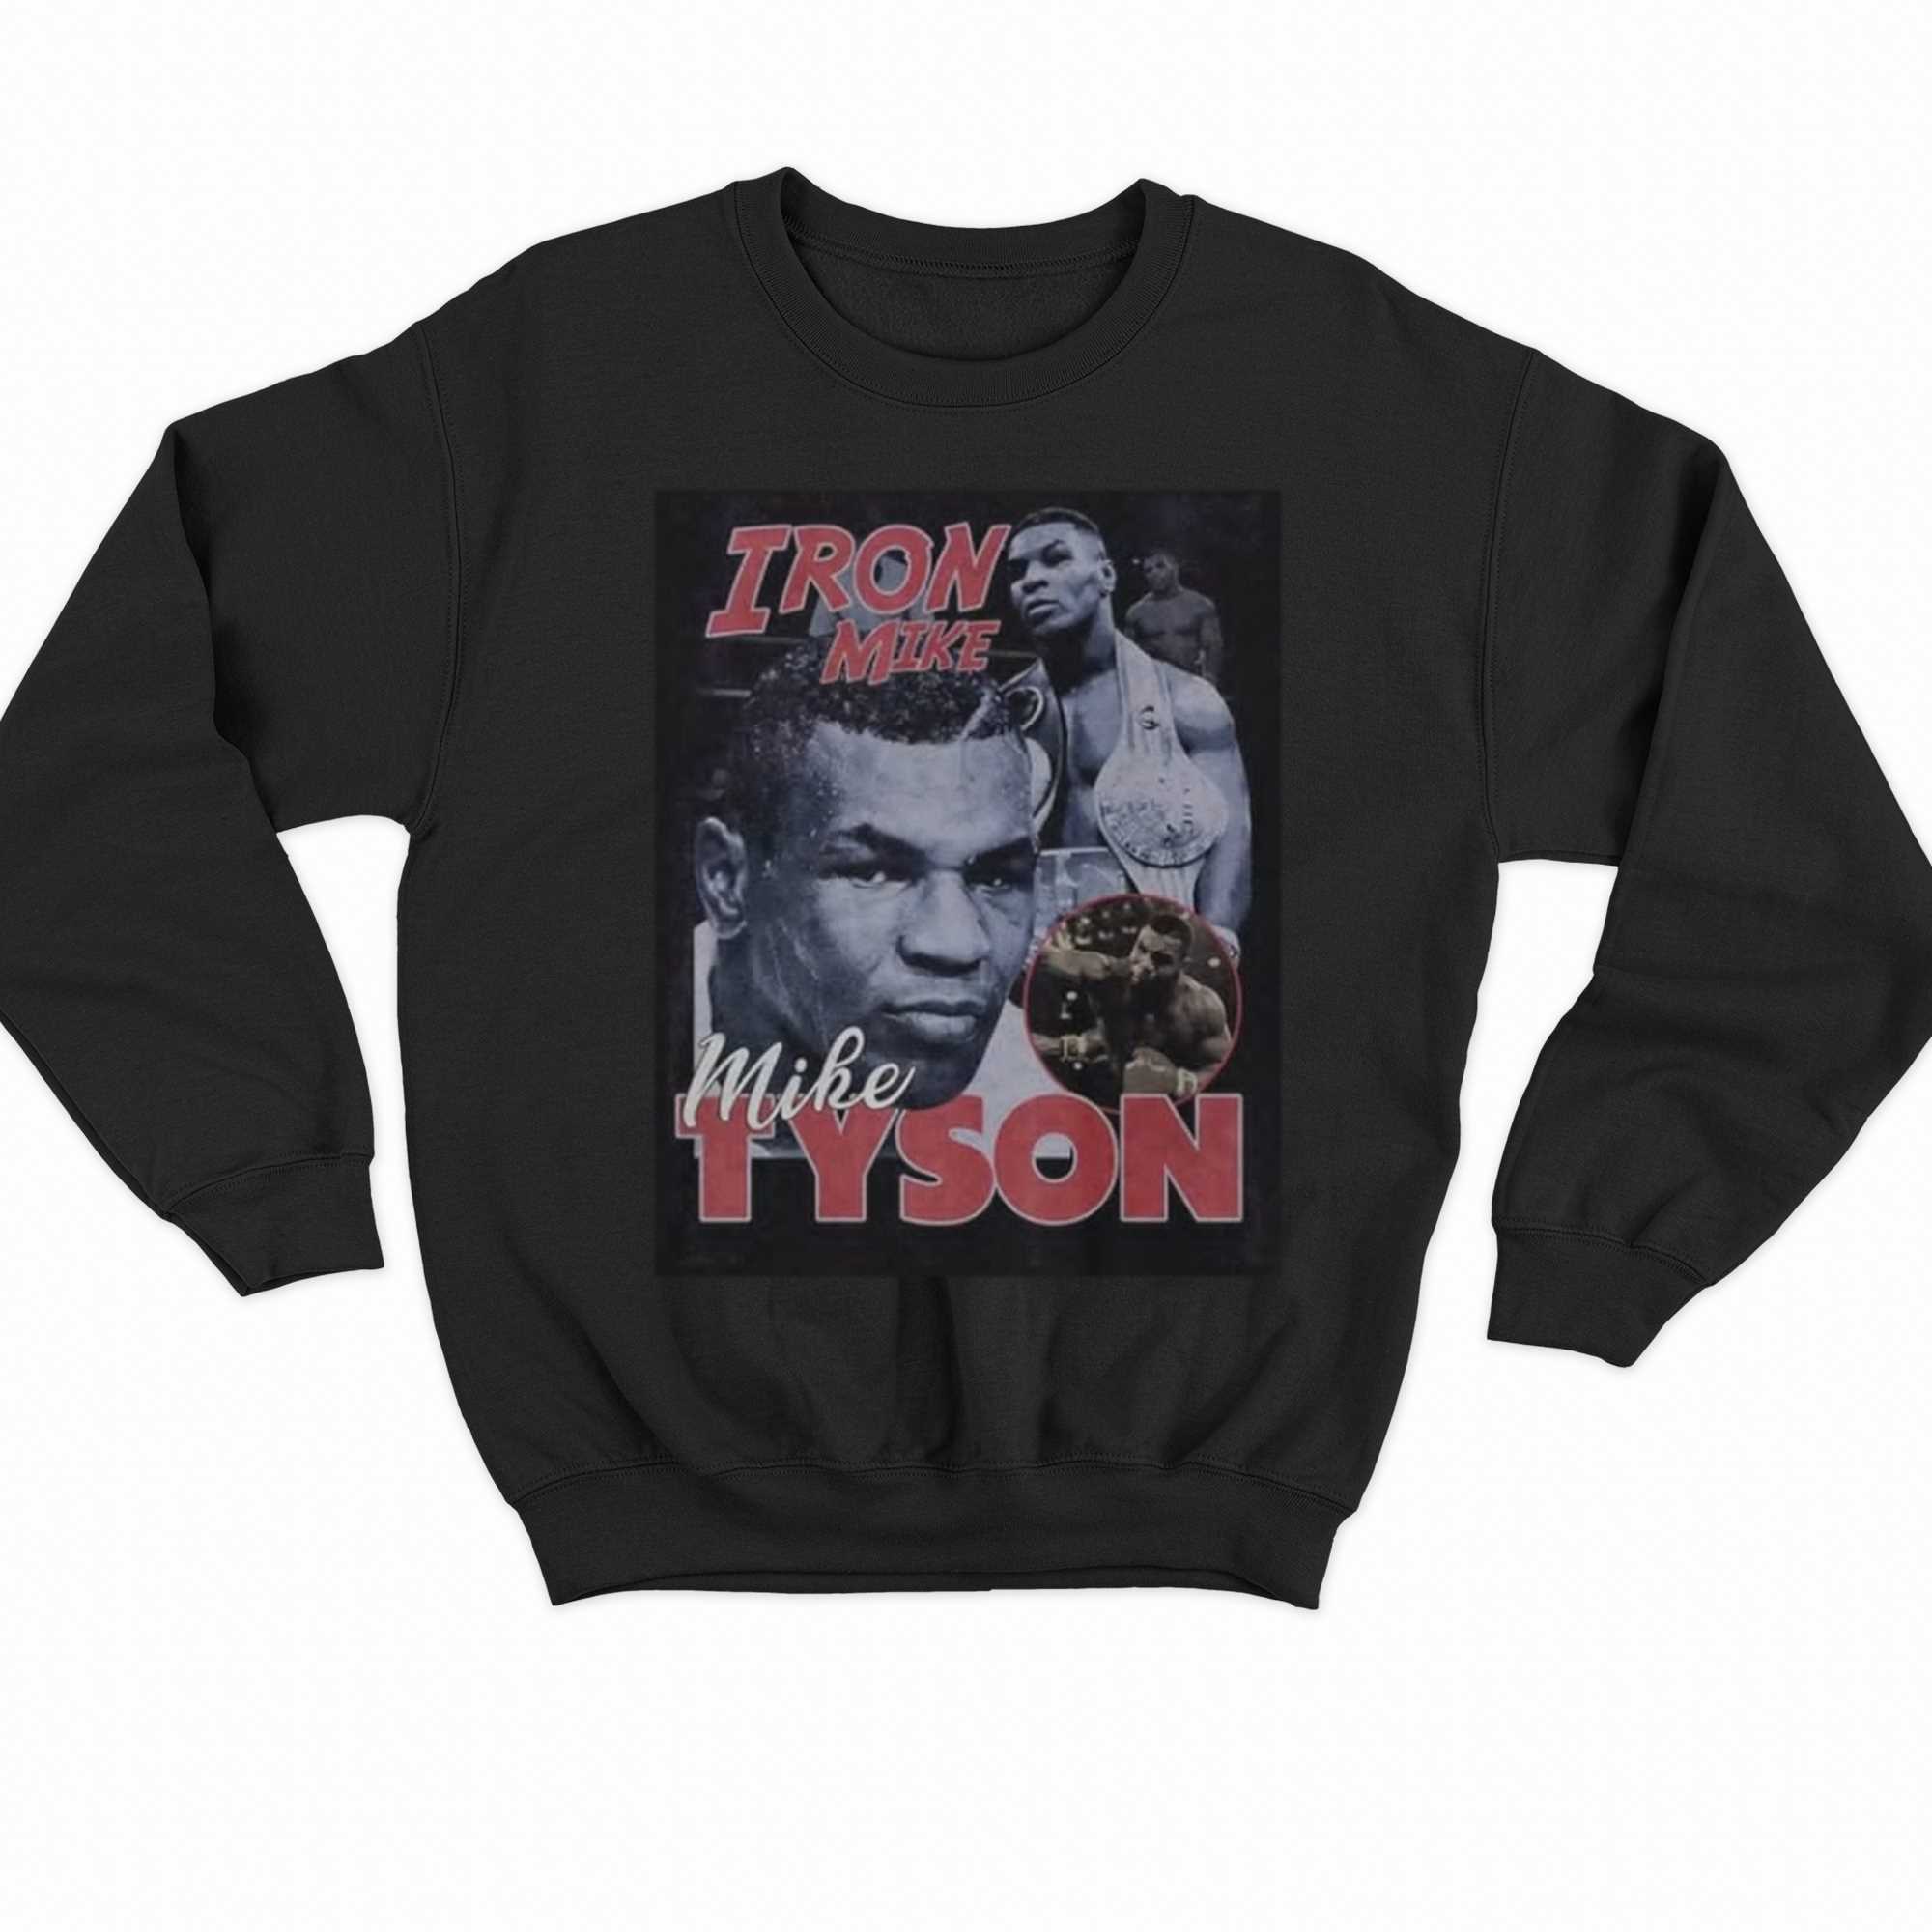 Iron Mike Tyson T-shirt 